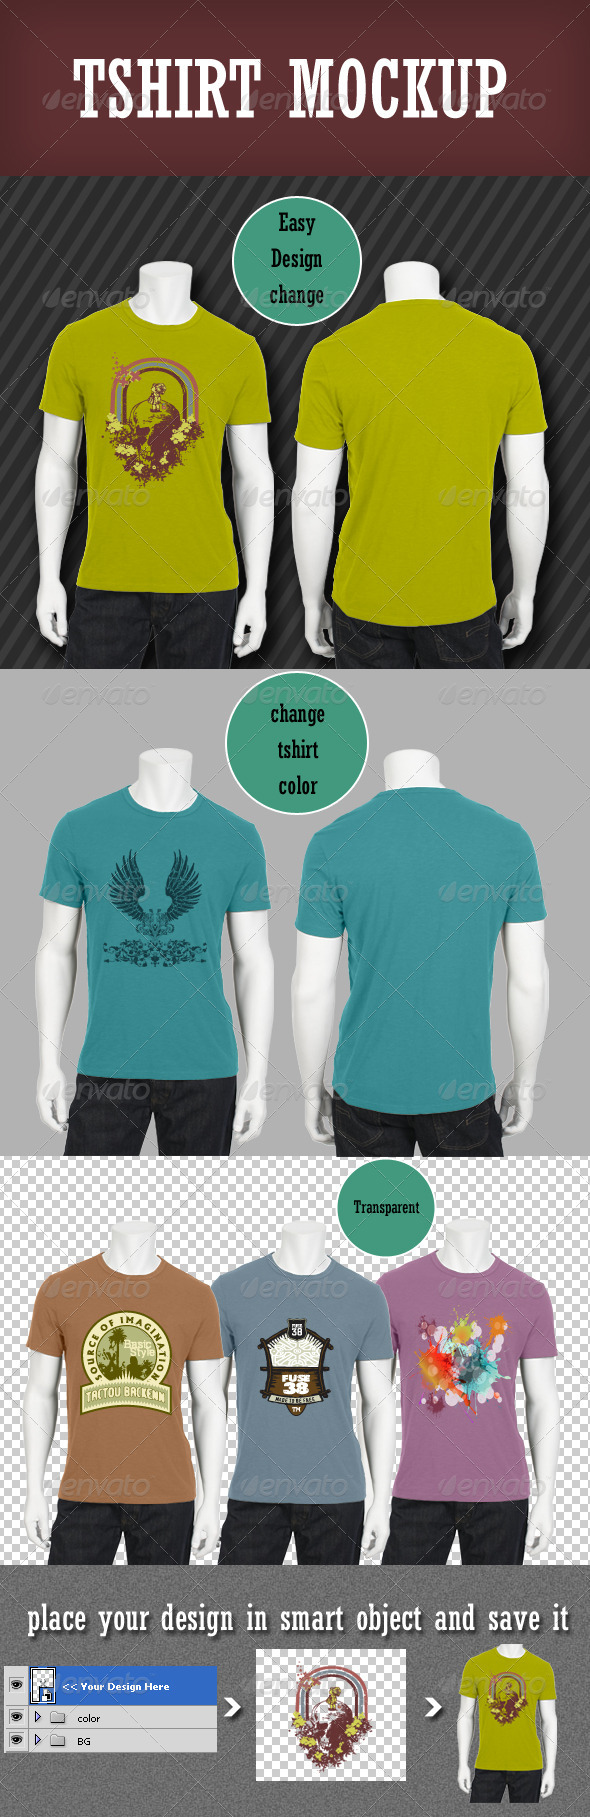 Download Uniform Shirts With Logo Mockup Template » Dondrup.com